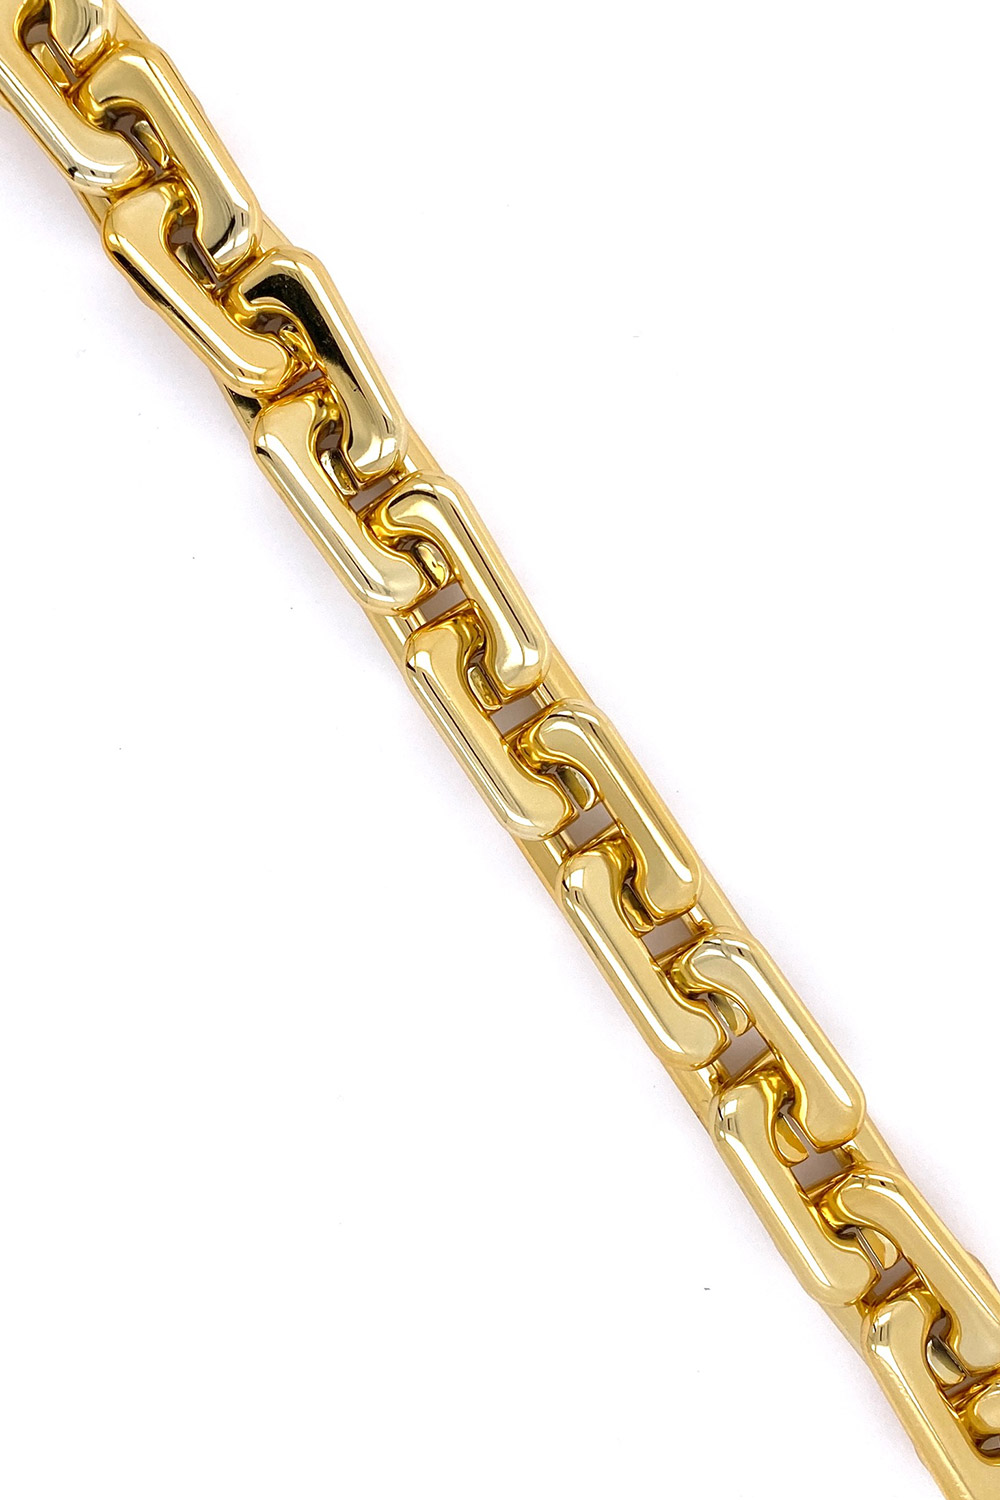 Gold Plastic Chain – thick 60cm